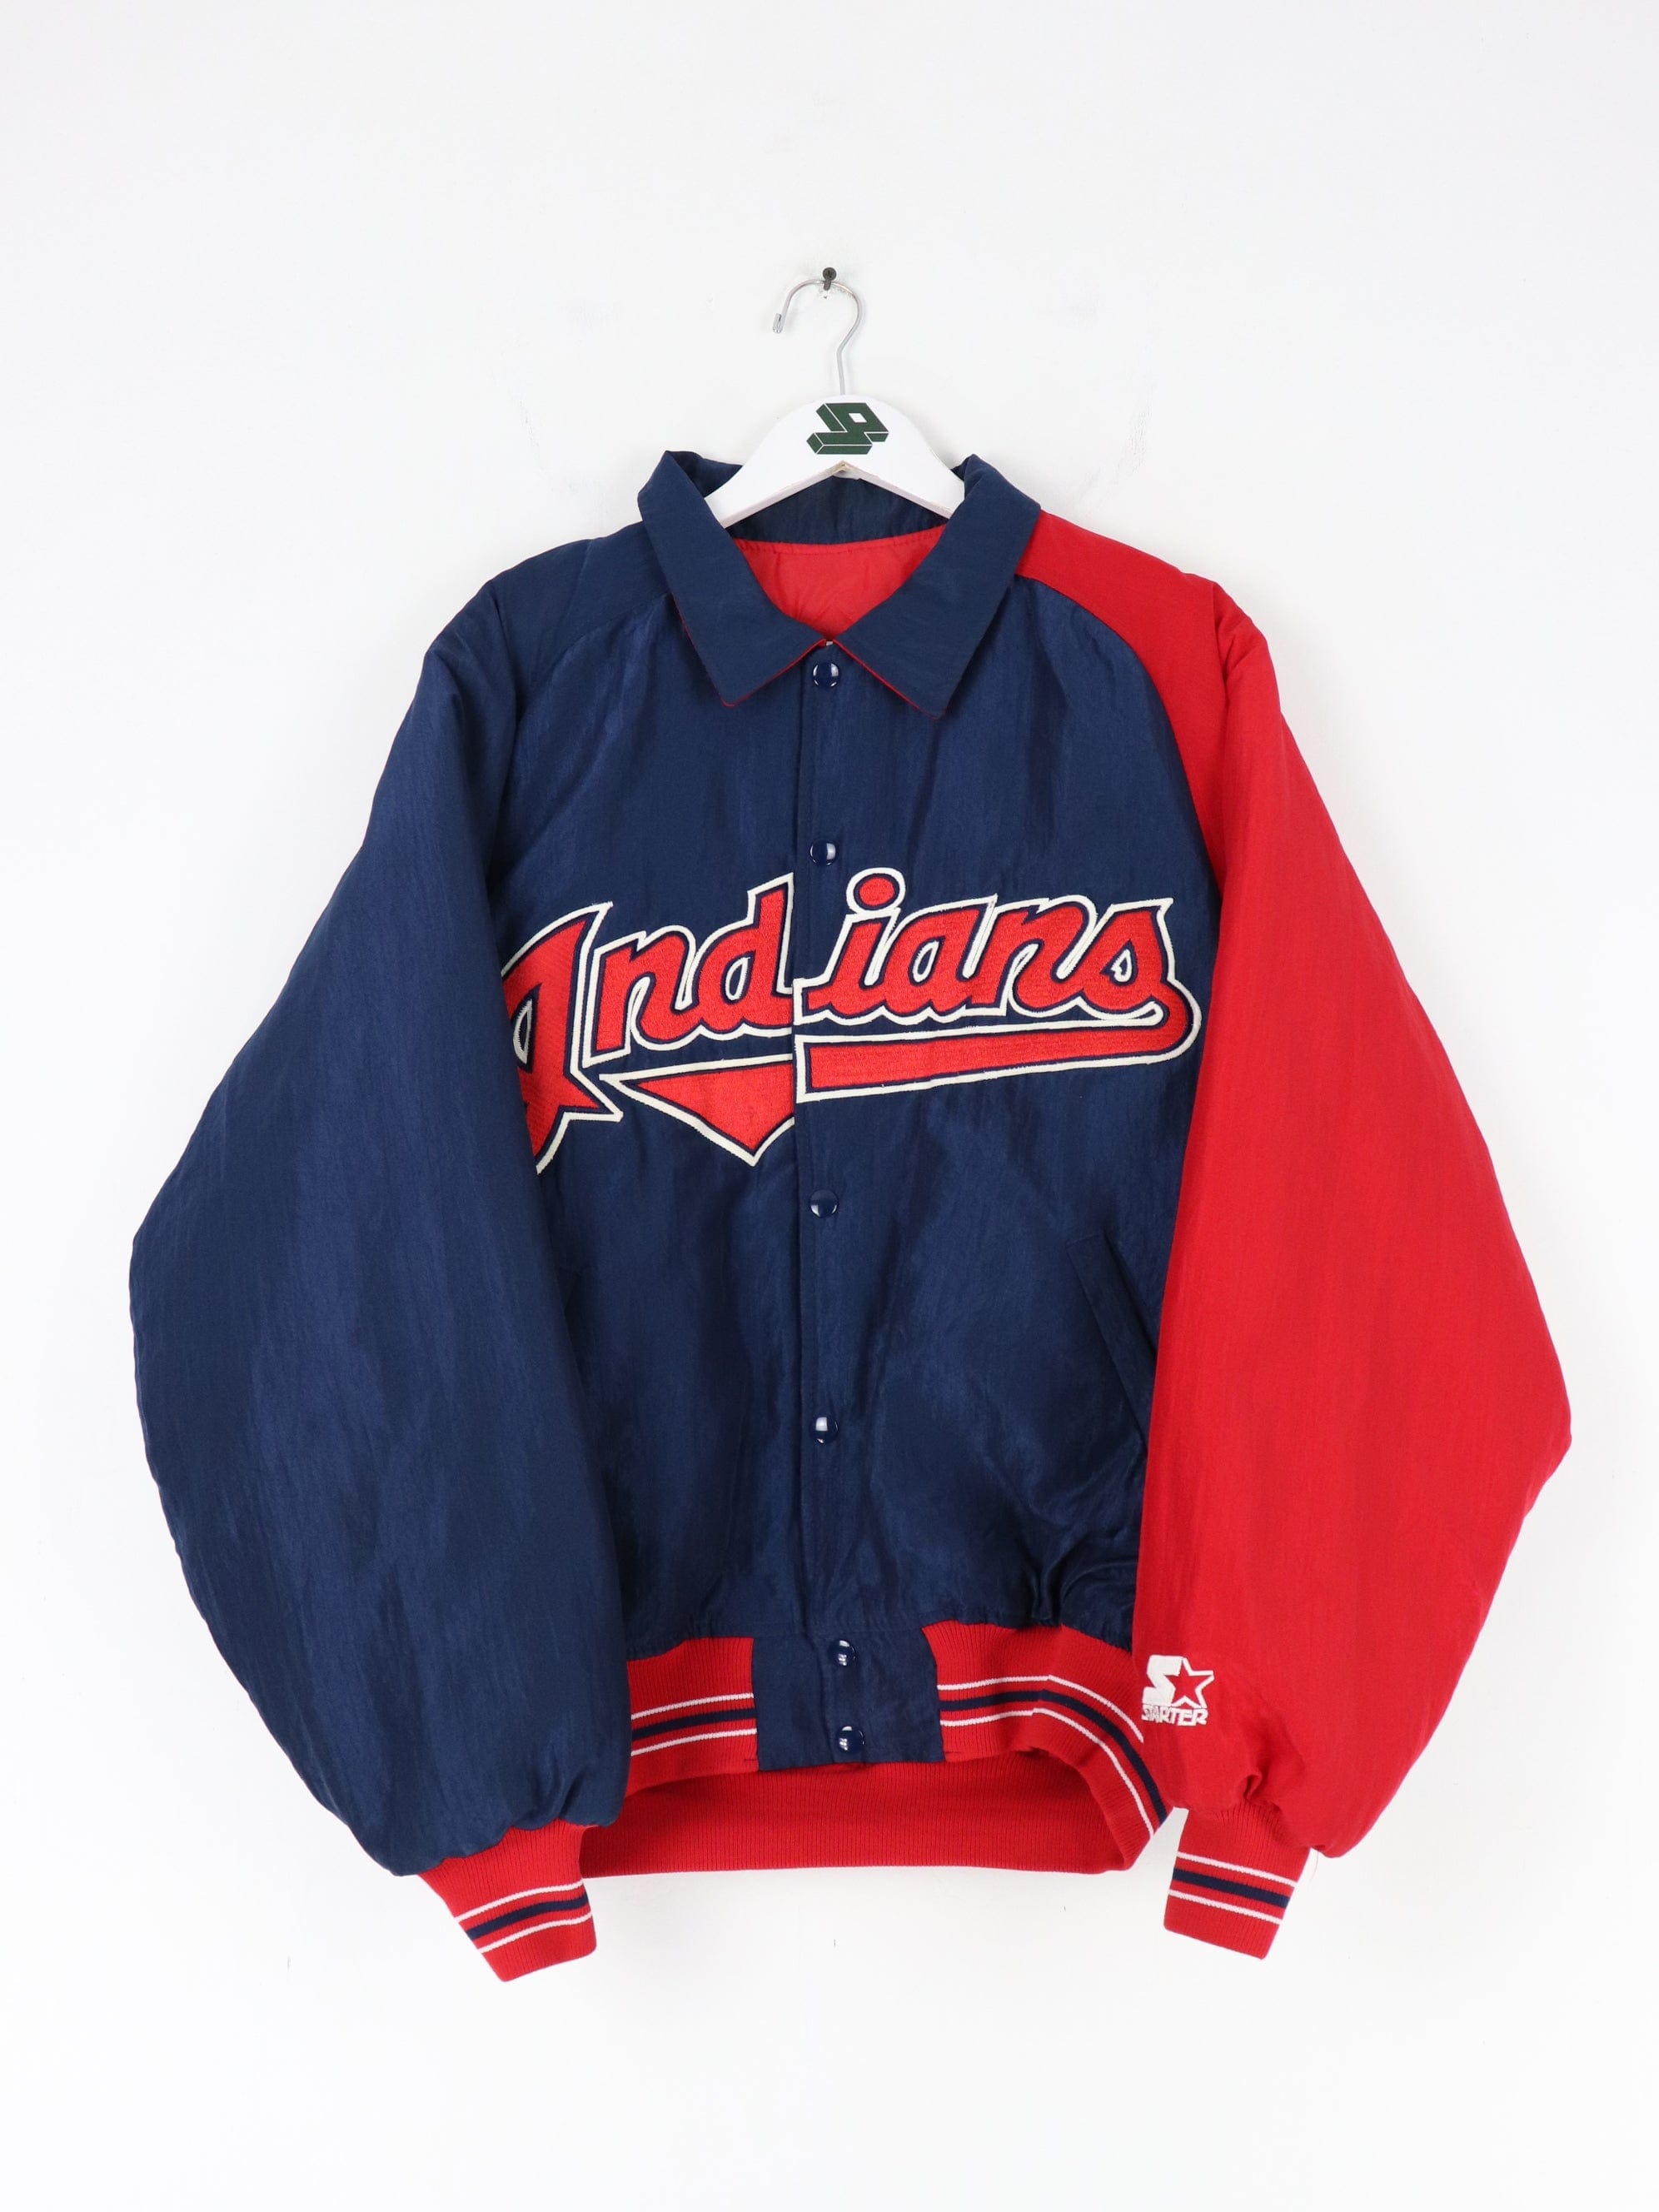 Ny YANKEES vintage MLB jackets Mens Fashion Coats Jackets and Outerwear  on Carousell